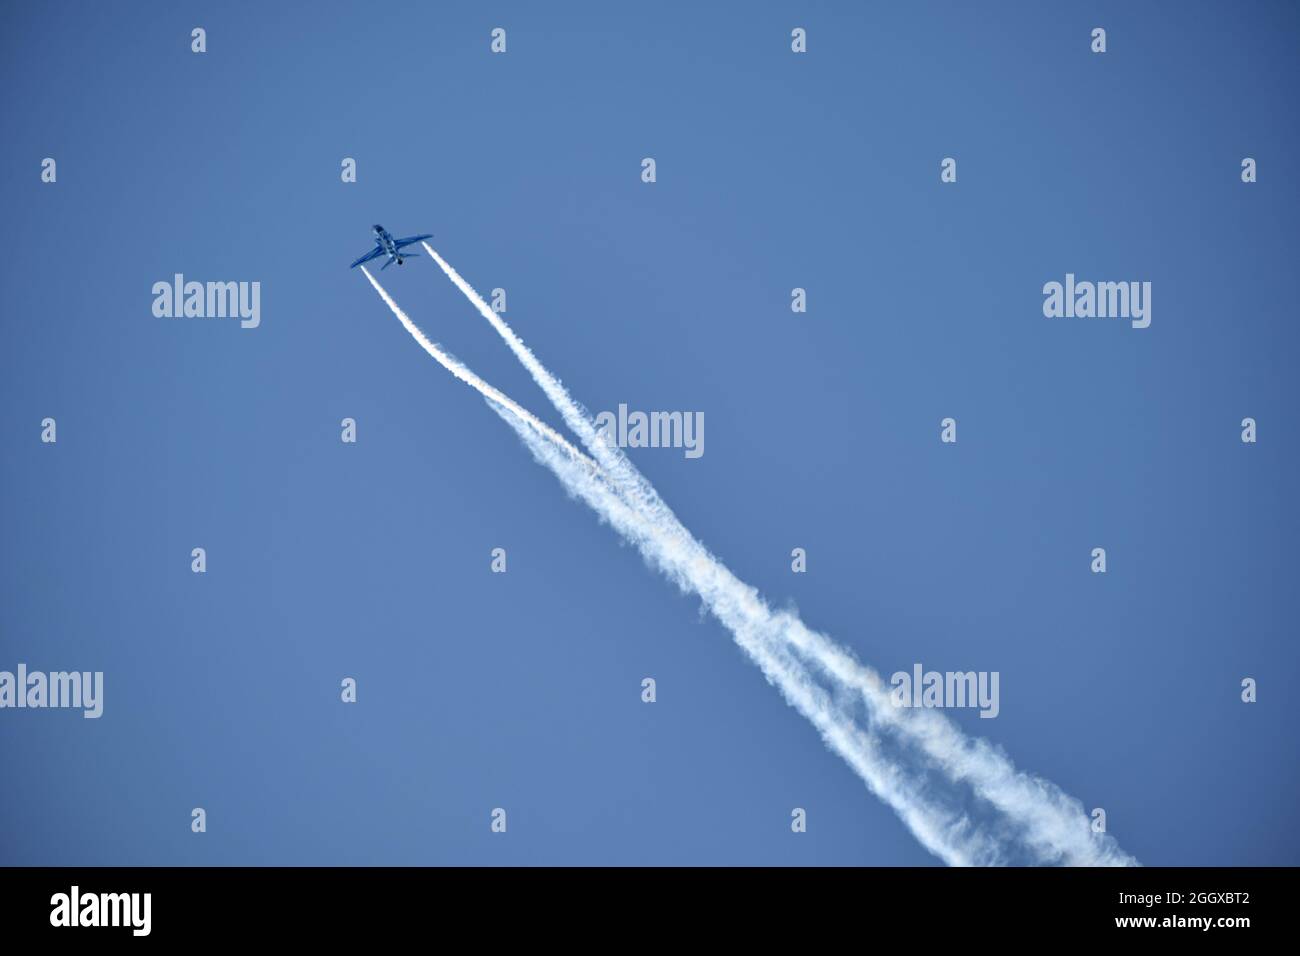 Acrobatics of the plane with wing smoke Stock Photo